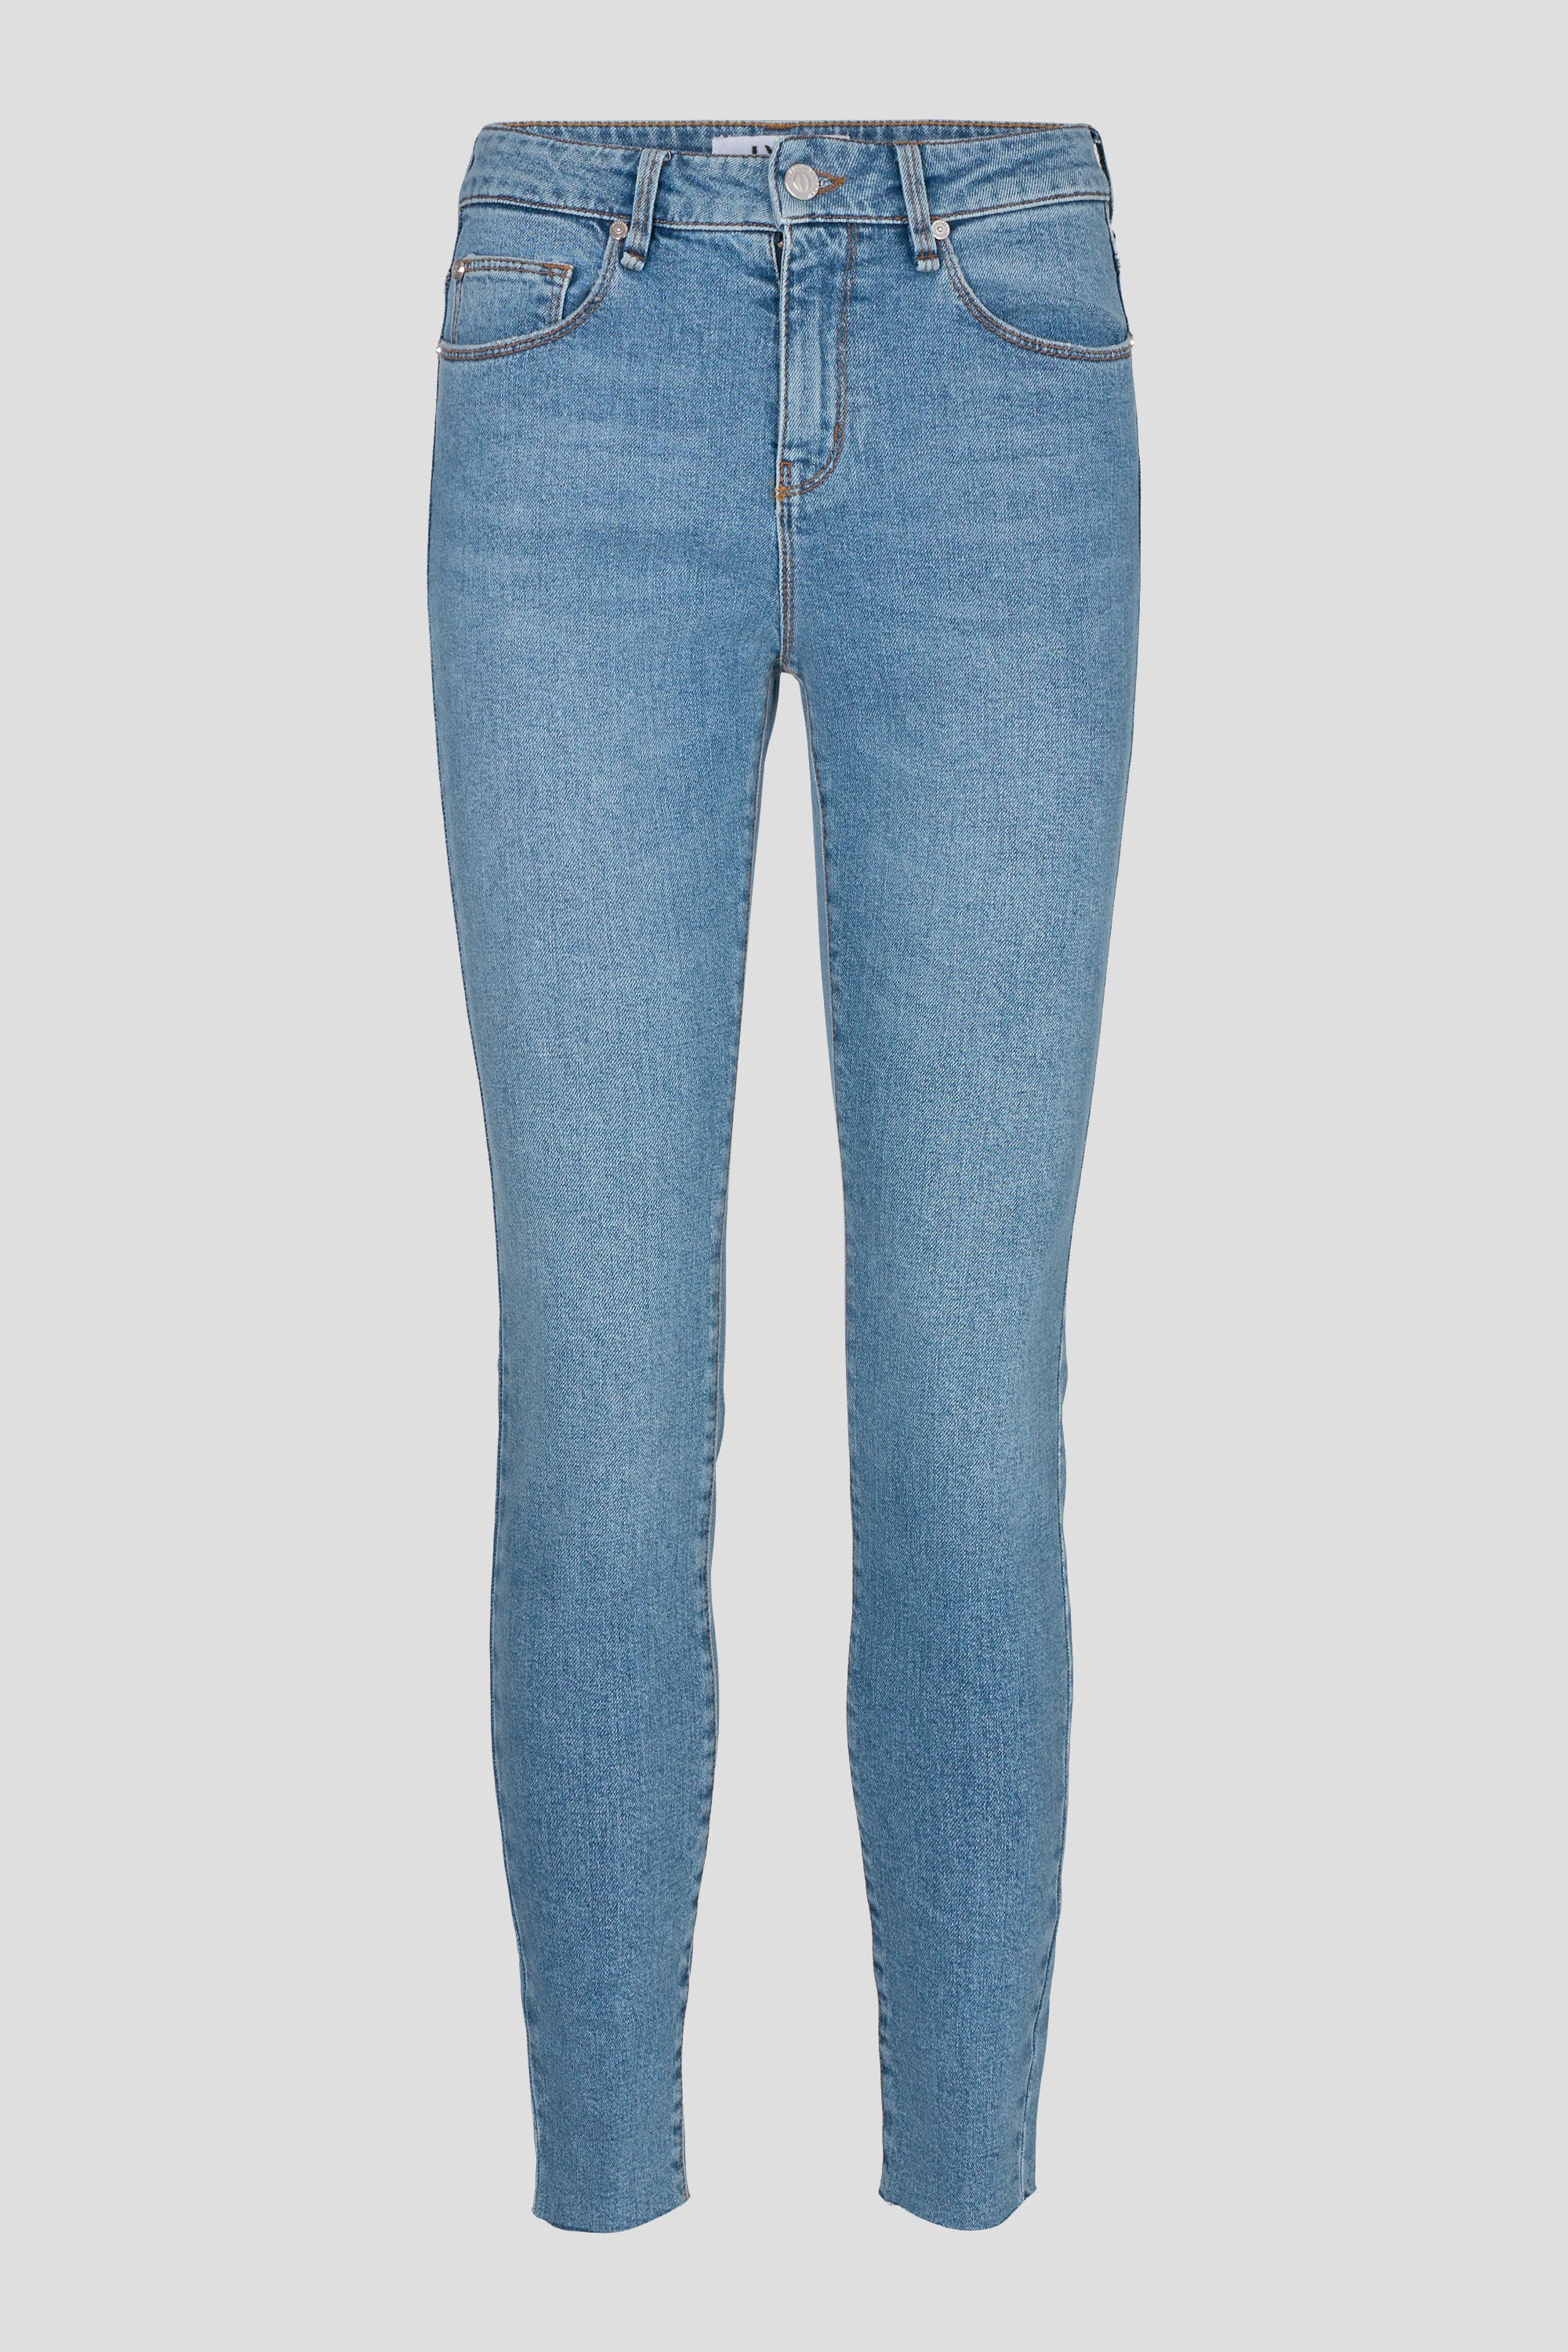 IVY Copenhagen IVY-Alexa Jeans wash Akita Dist. Jeans & Pants 51 Denim Blue